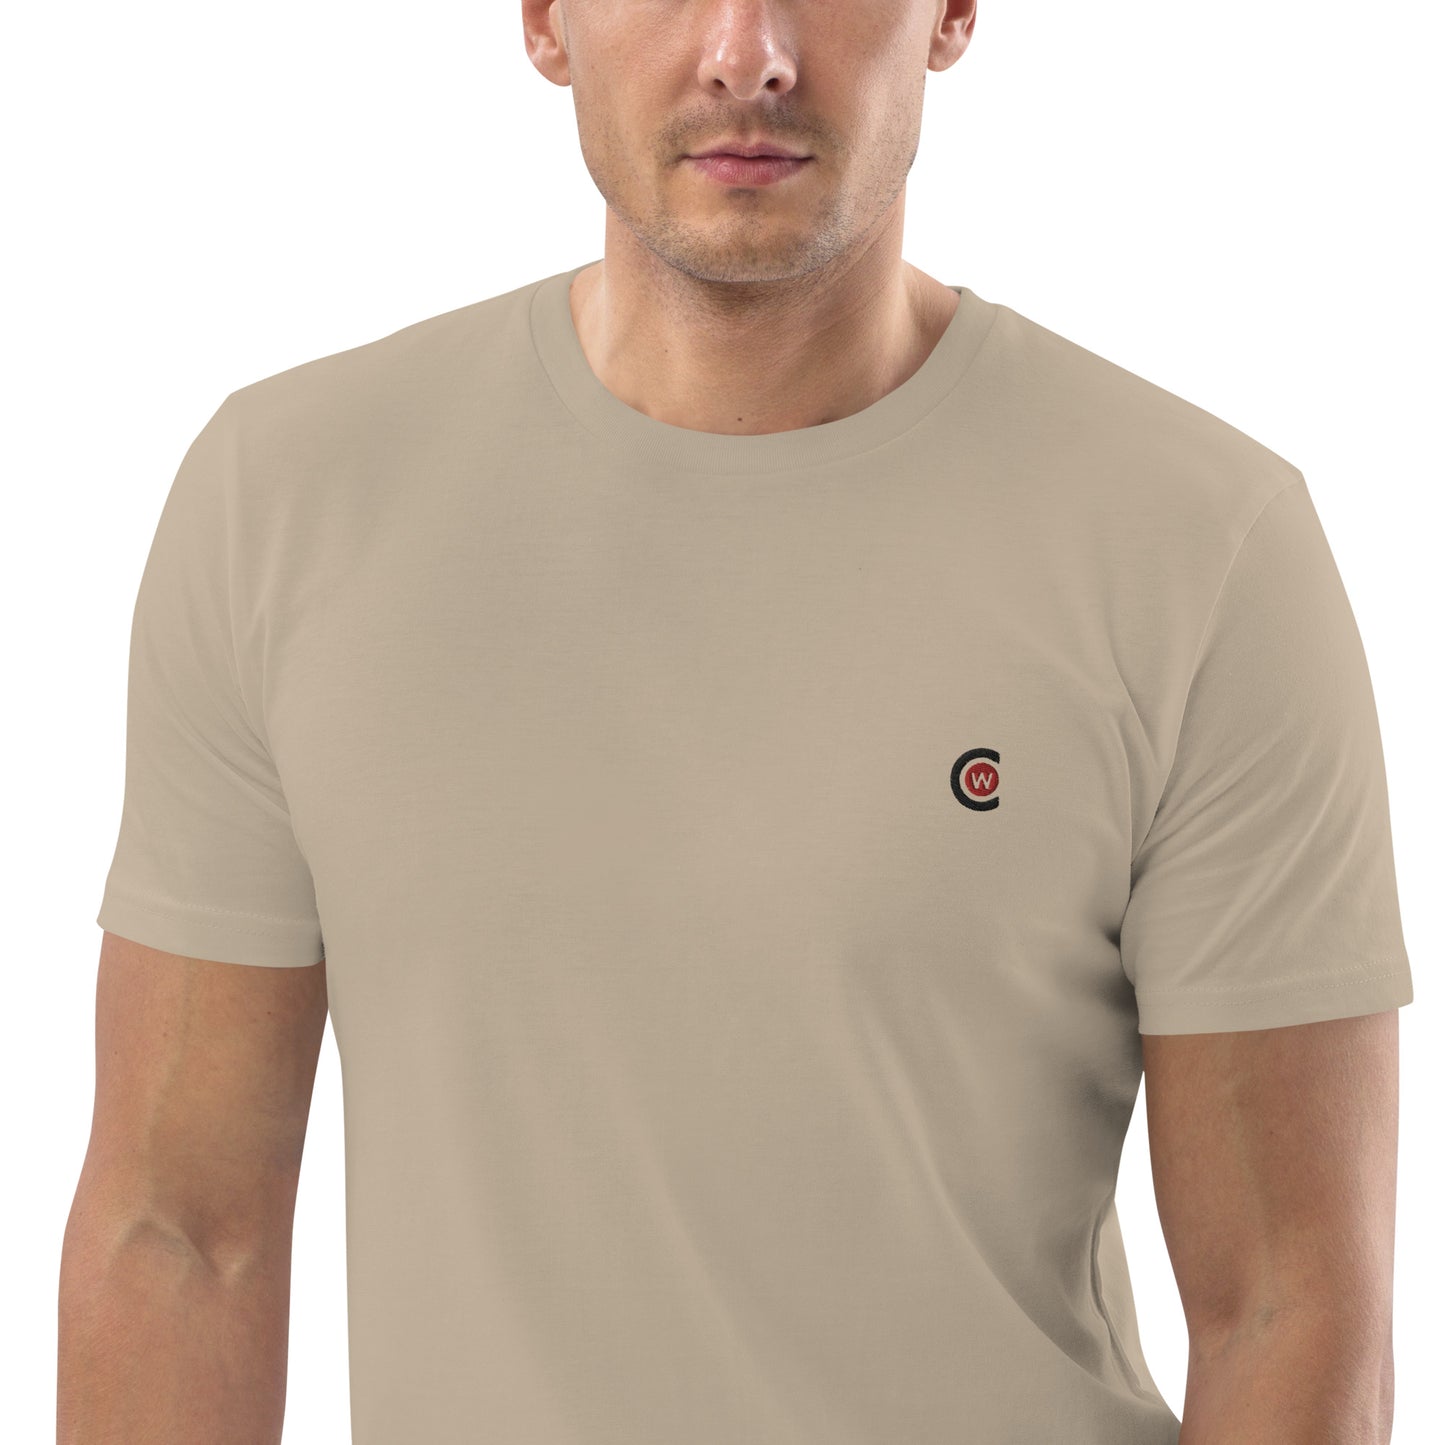 Men's Organic cotton t-shirt